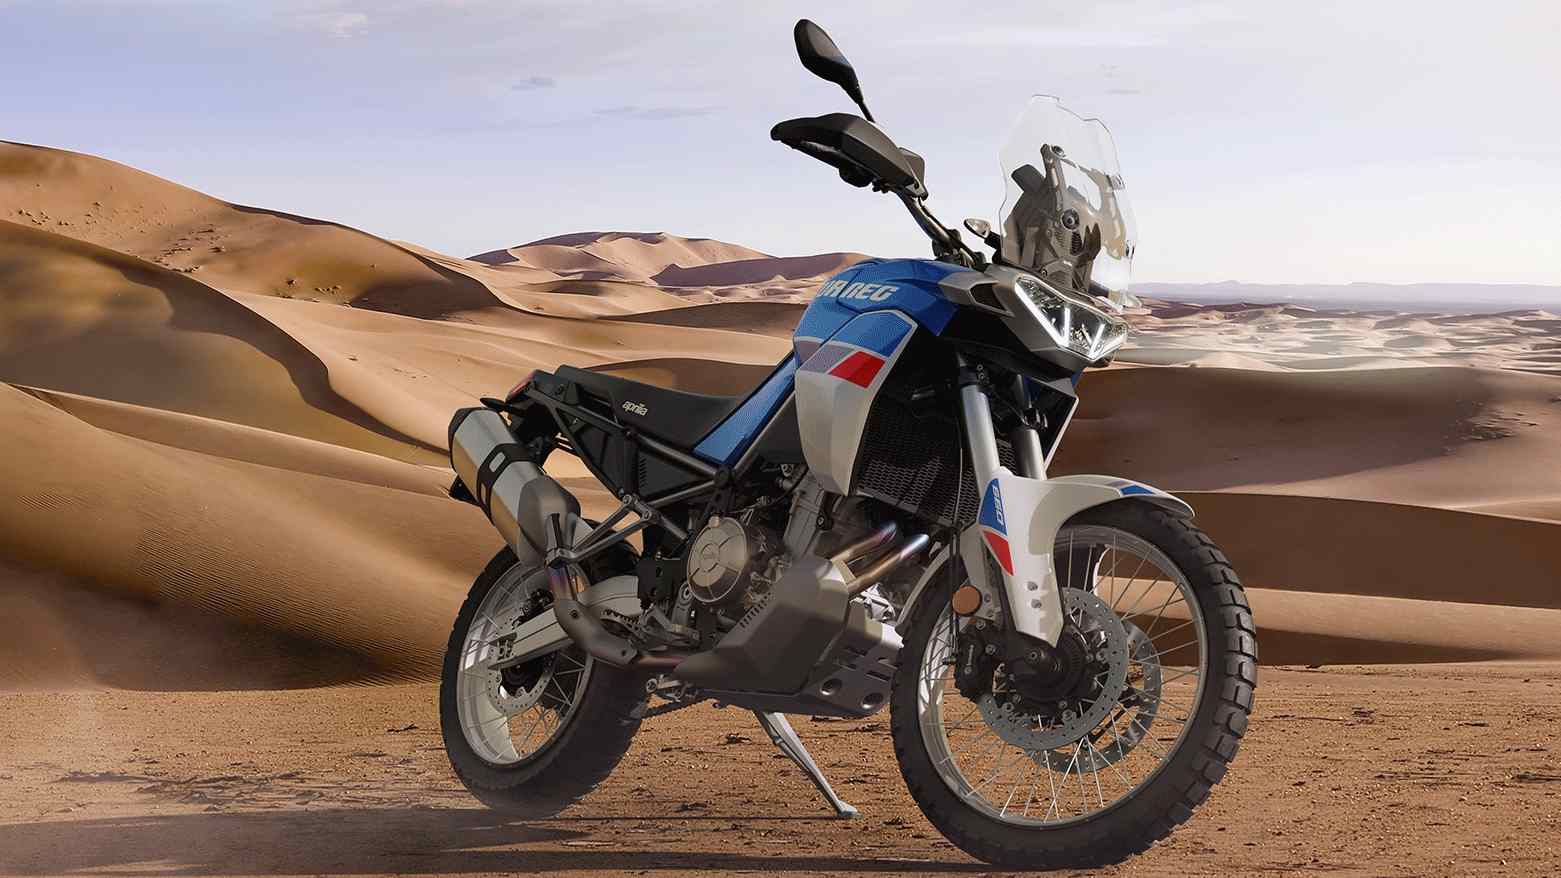 The Aprilia Tuareg 660 will be priced around Rs 13-14 lakh in India. Image: Aprilia